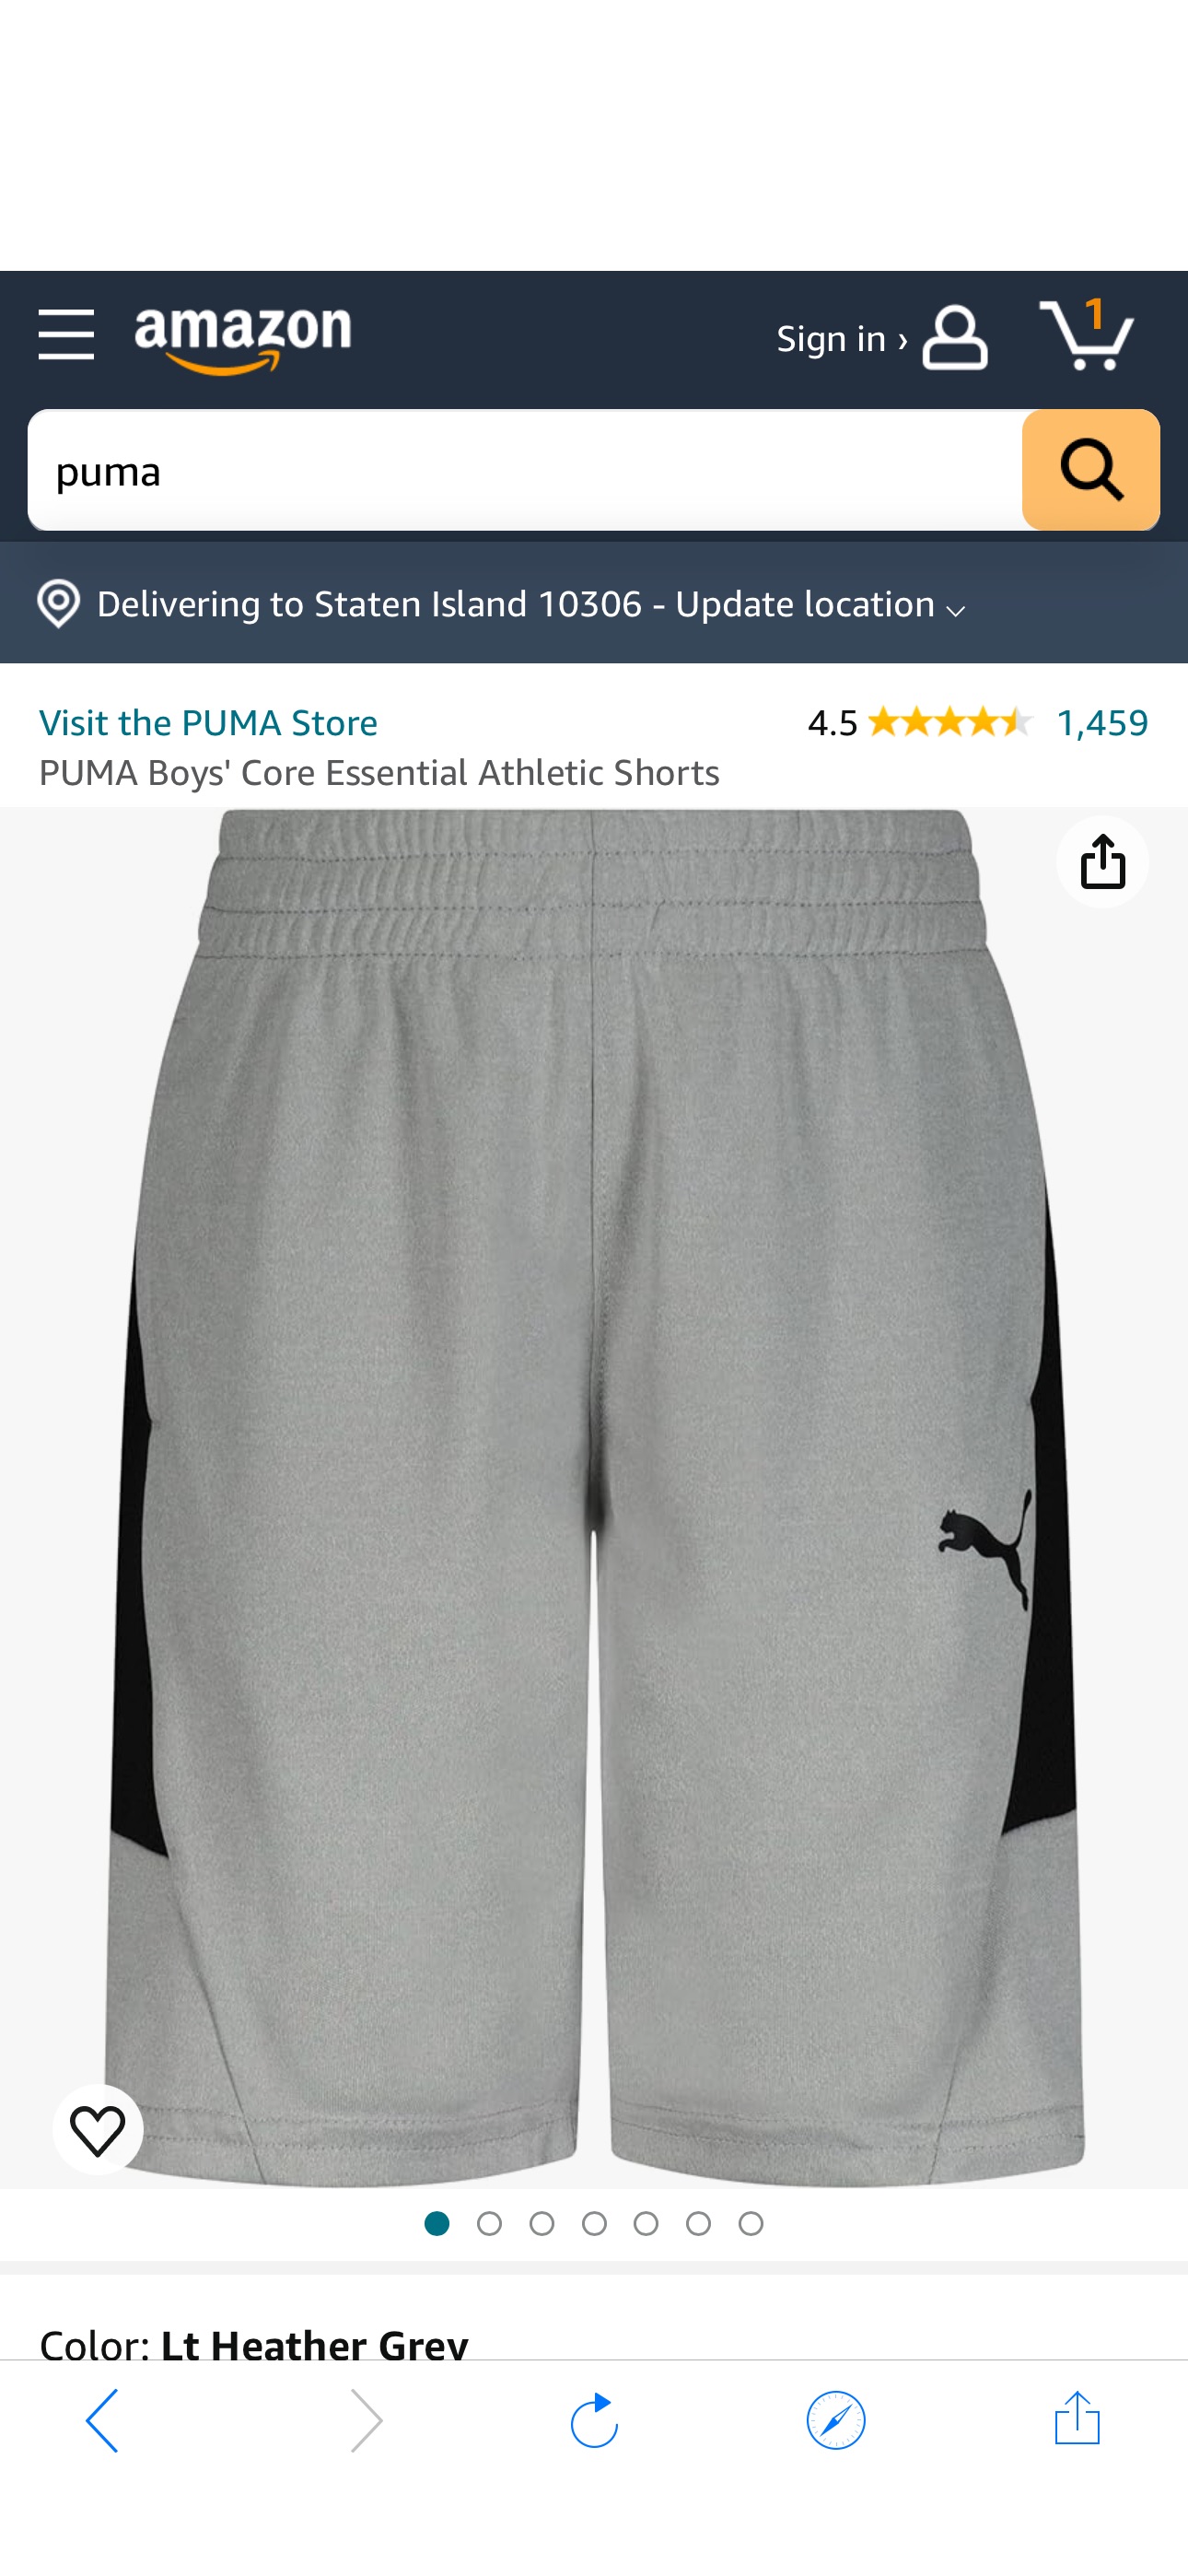 Amazon.com: PUMA Boys' Core Essential Athletic Shorts, Lt Heather Grey, Large: Clothing, Shoes & Jewelry